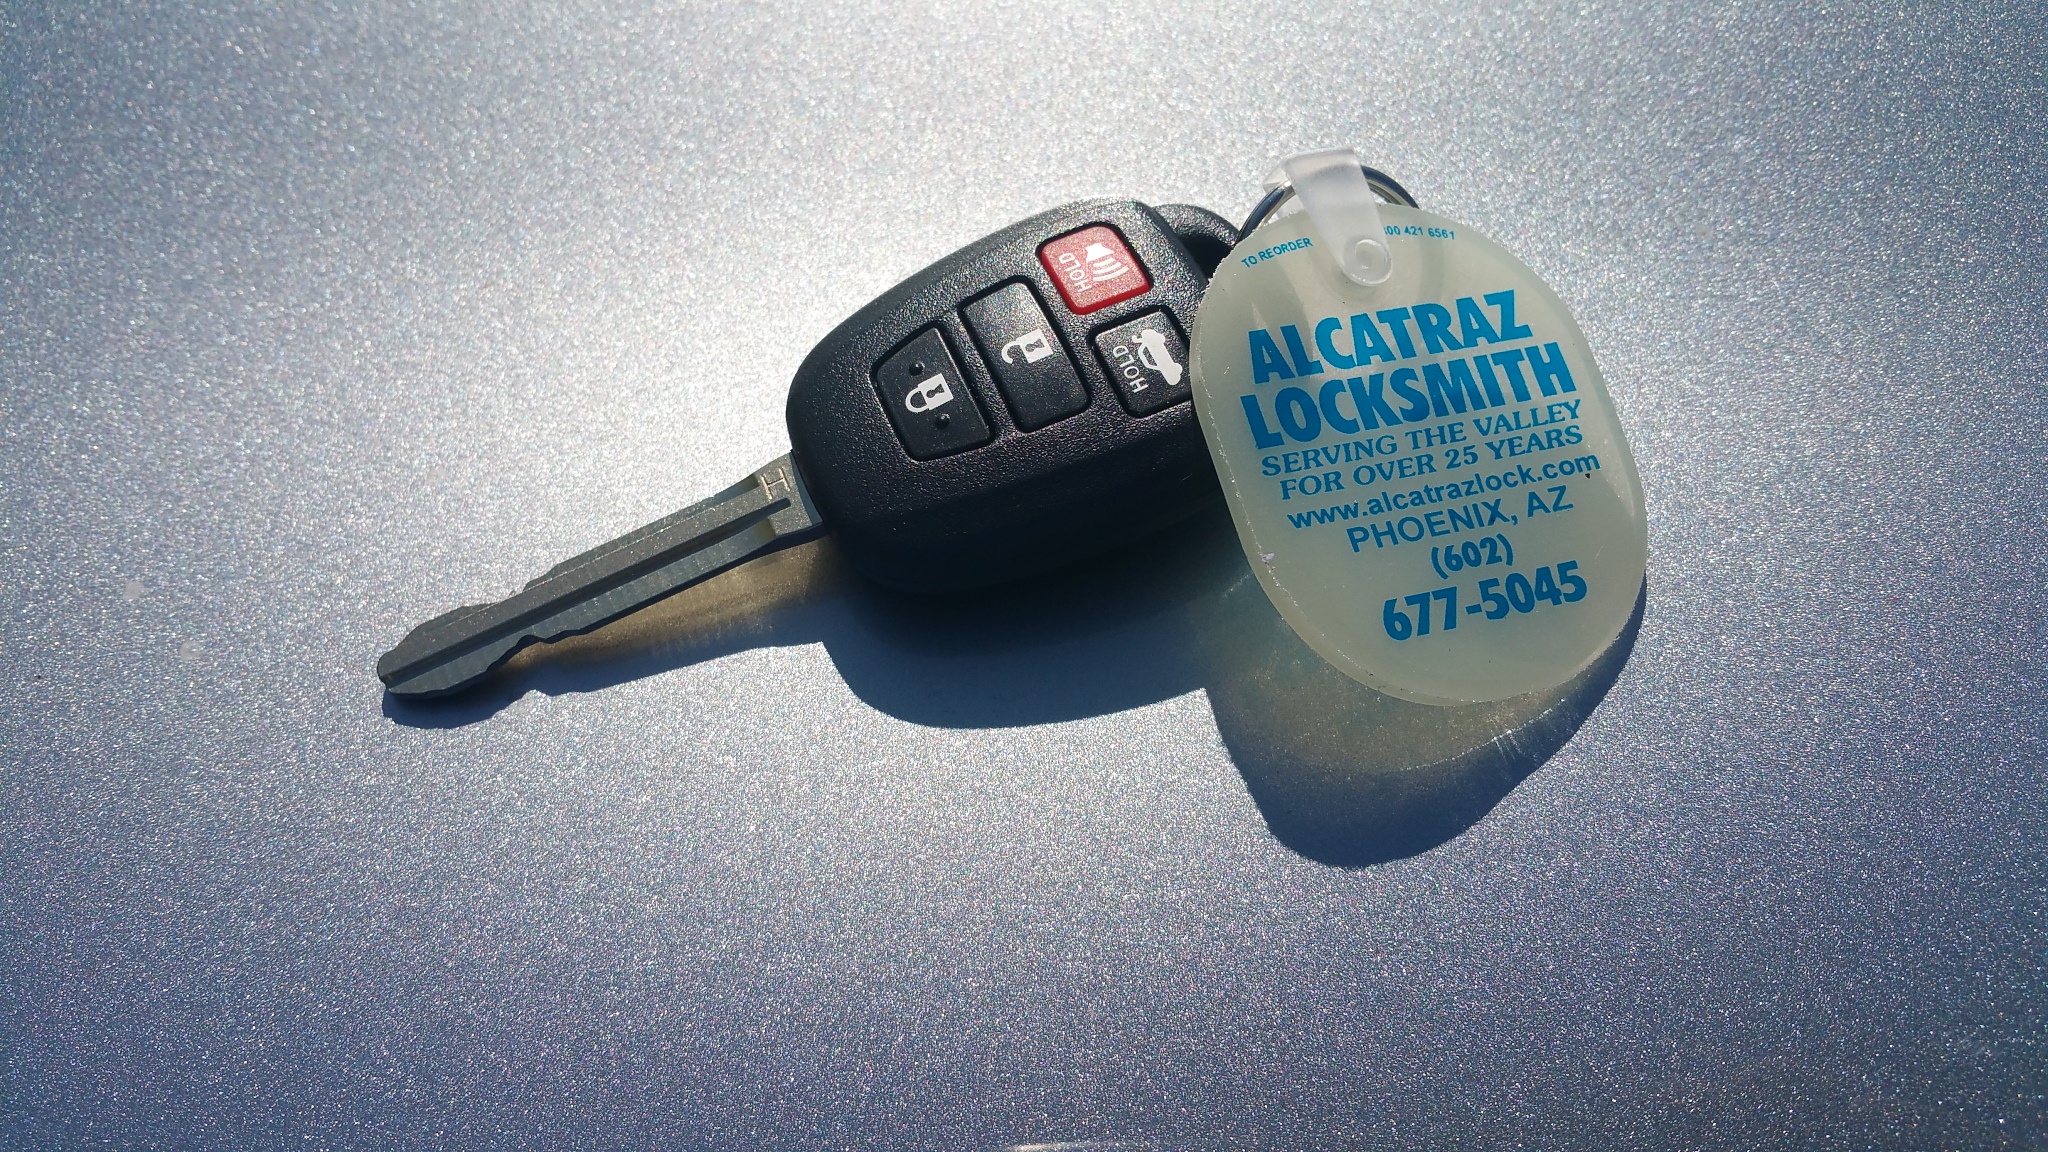 Car Key Replacement & Duplication for Peoria, AZ - Experts At Keys!